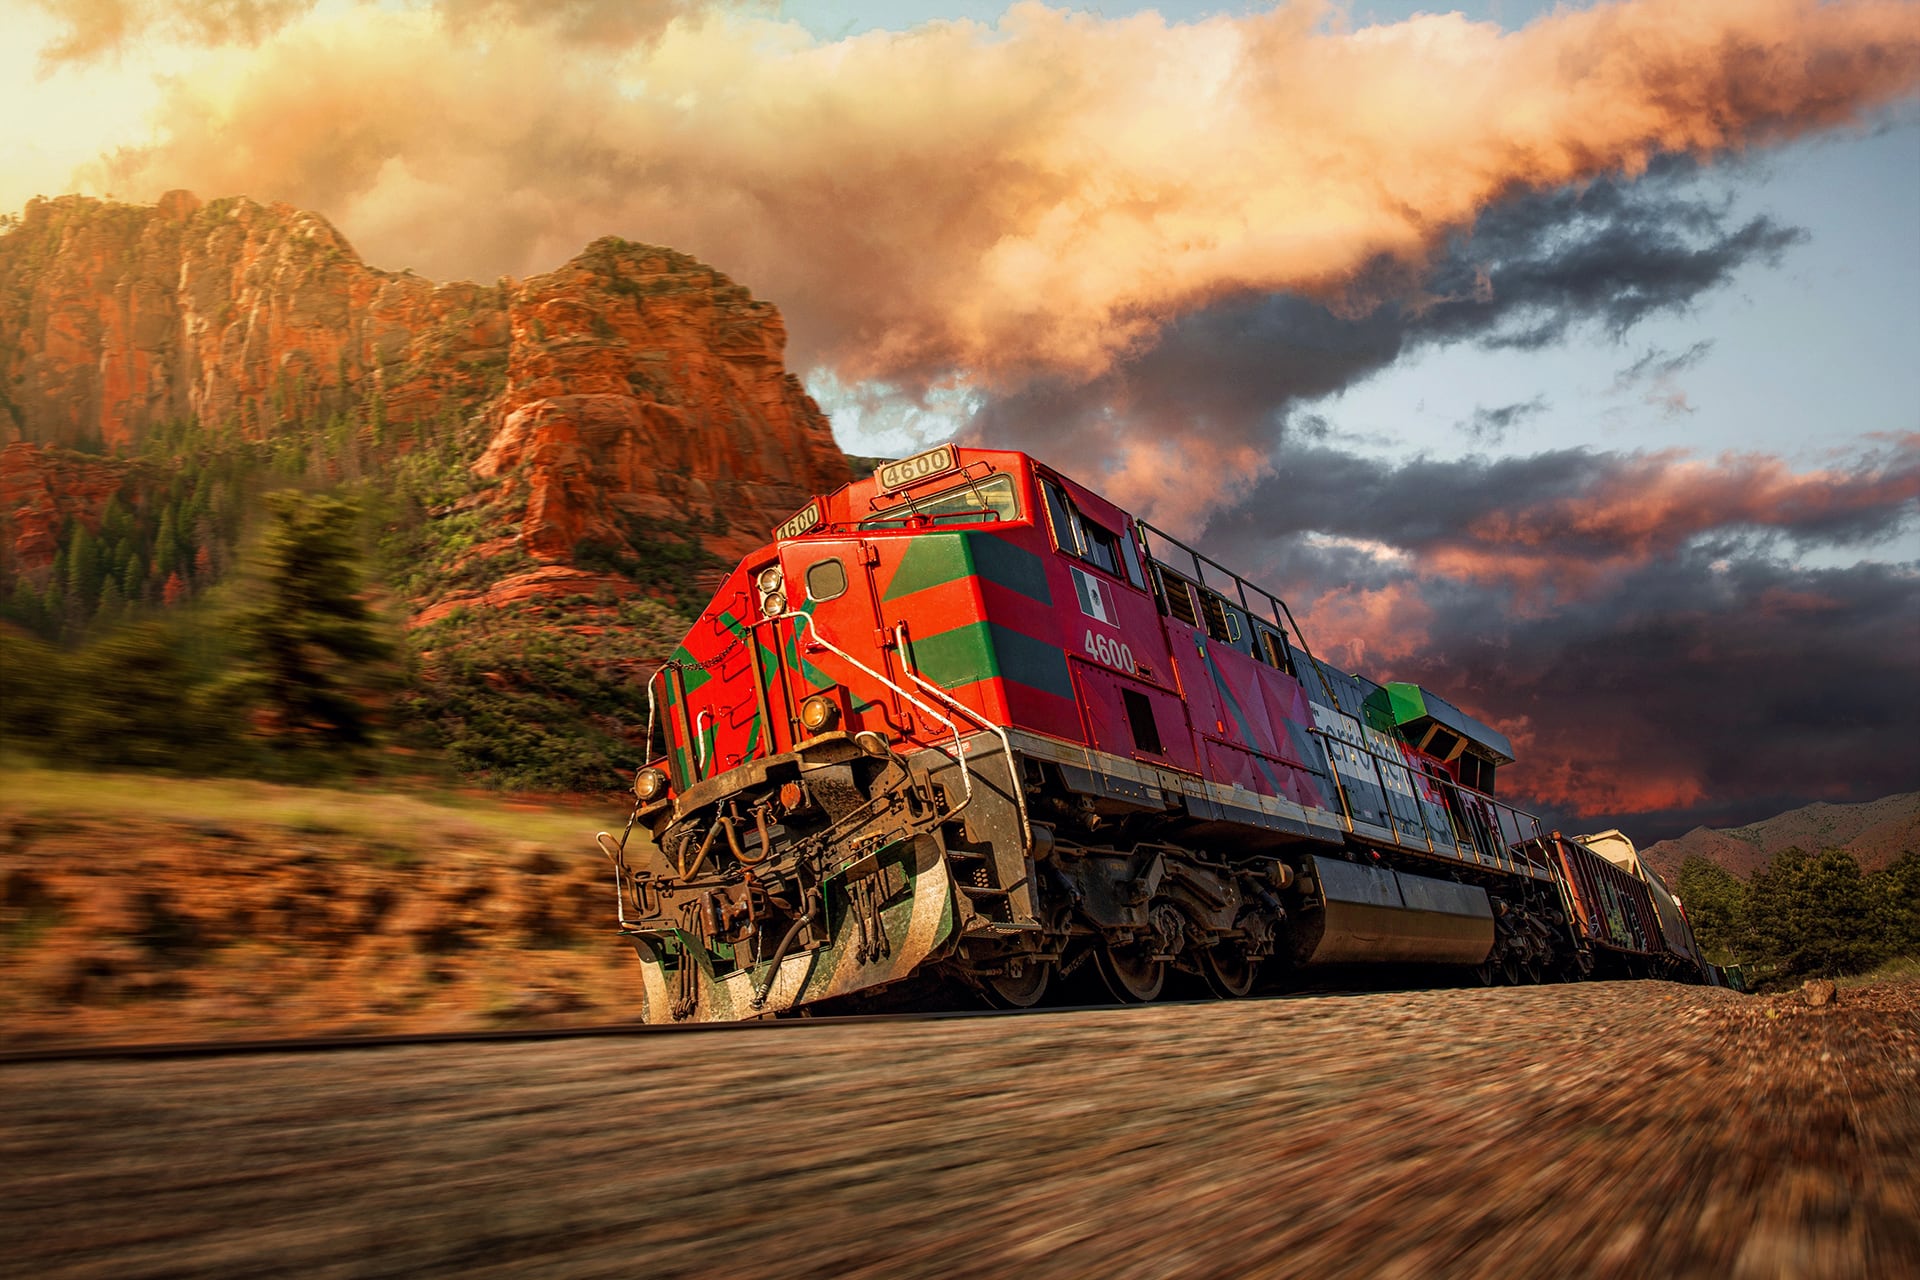 Phoenix Commercial Photographer photographs freight train